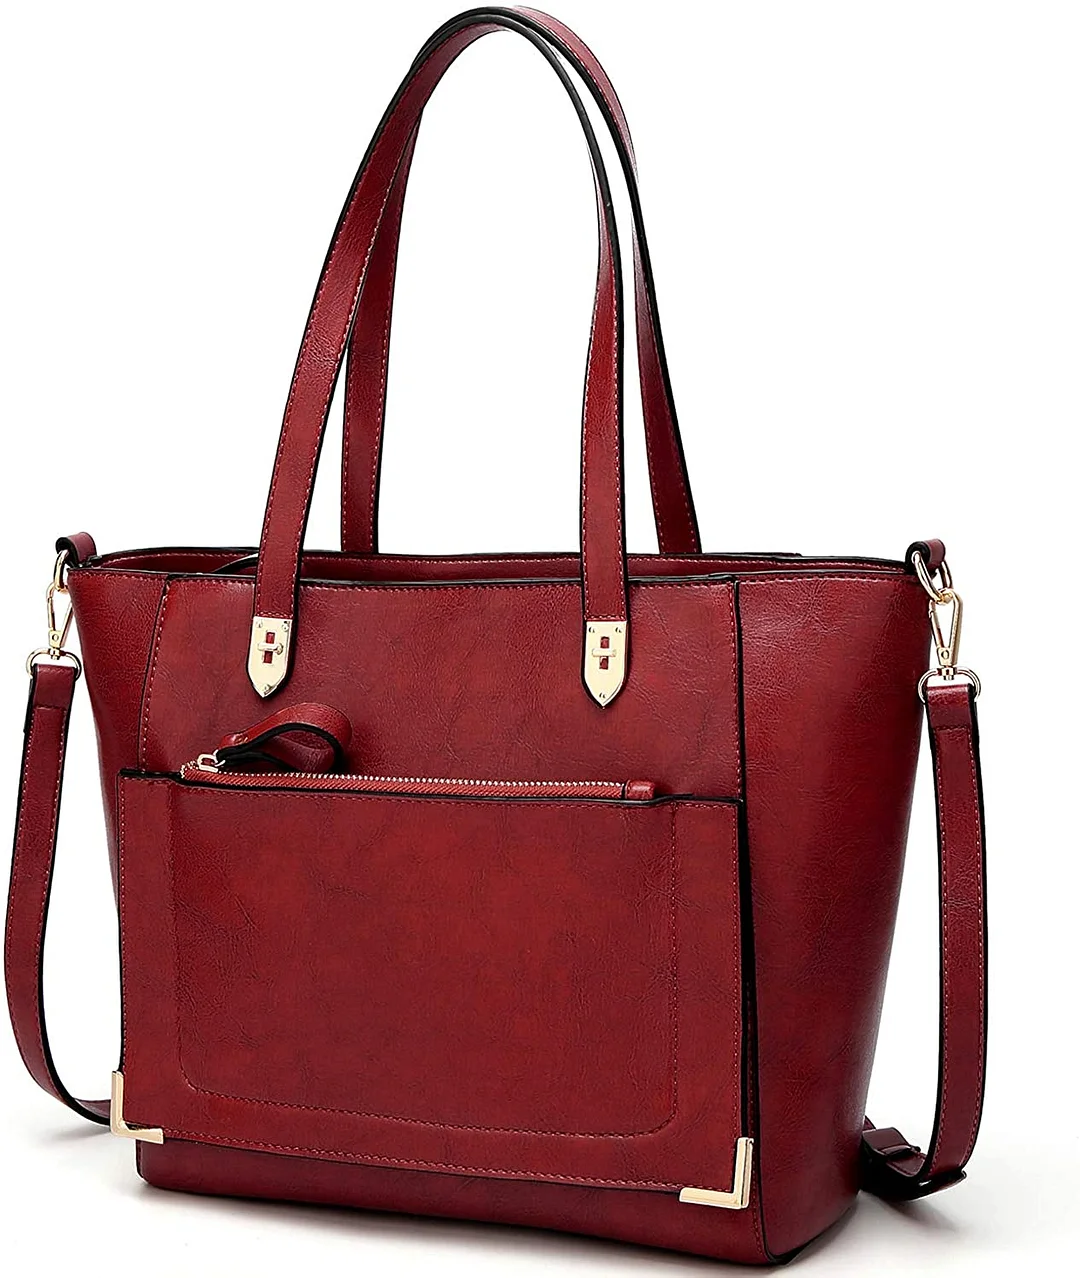 Satchel Purses and Handbags for Women Shoulder Tote Bags